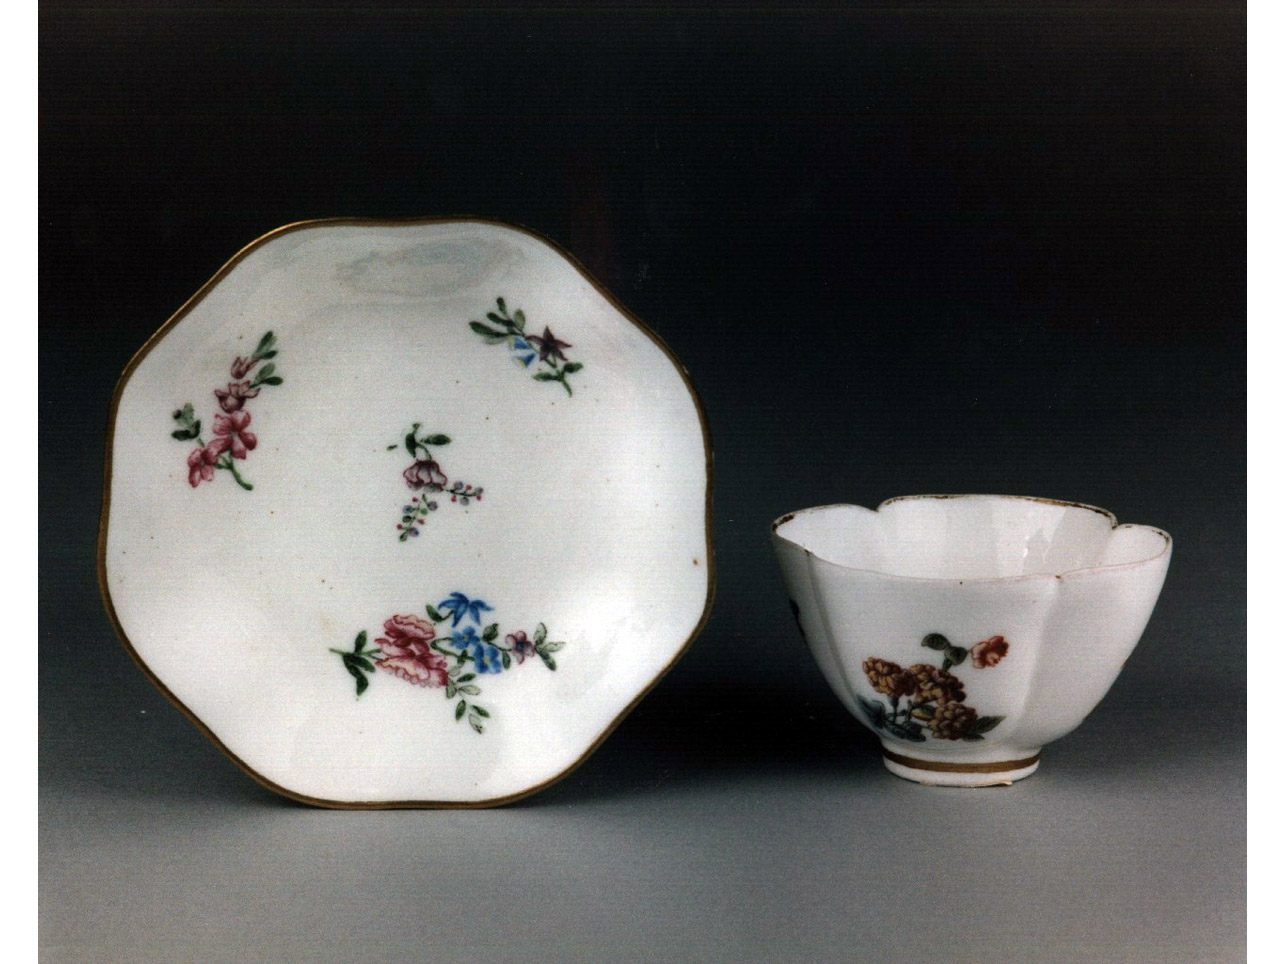 motivi decorativi floreali (tazza) - manifattura di Vincennes (sec. XVIII)